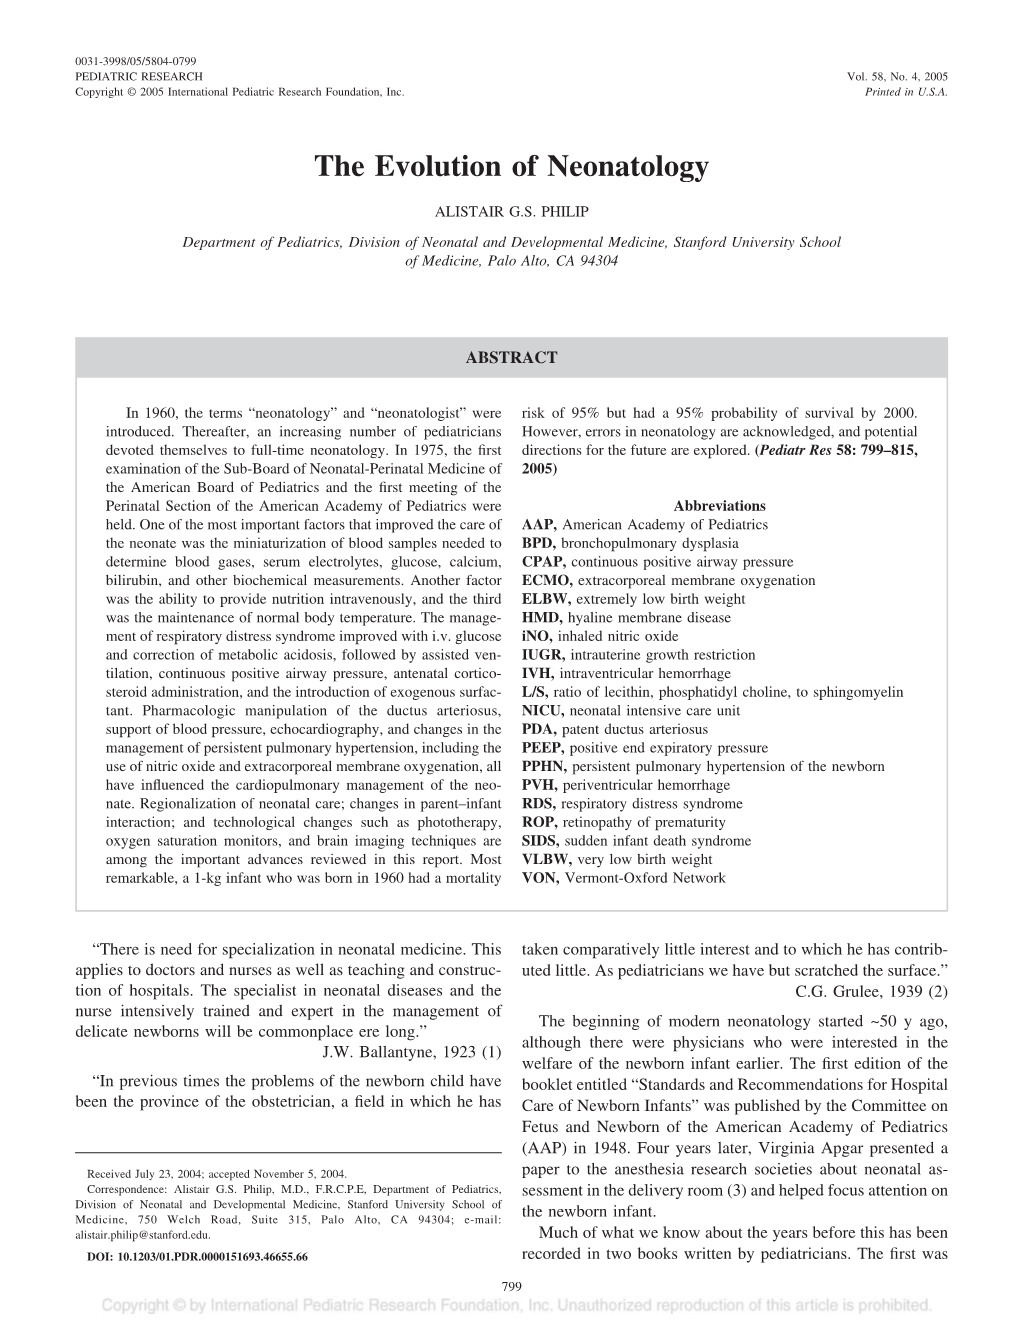 The Evolution of Neonatology